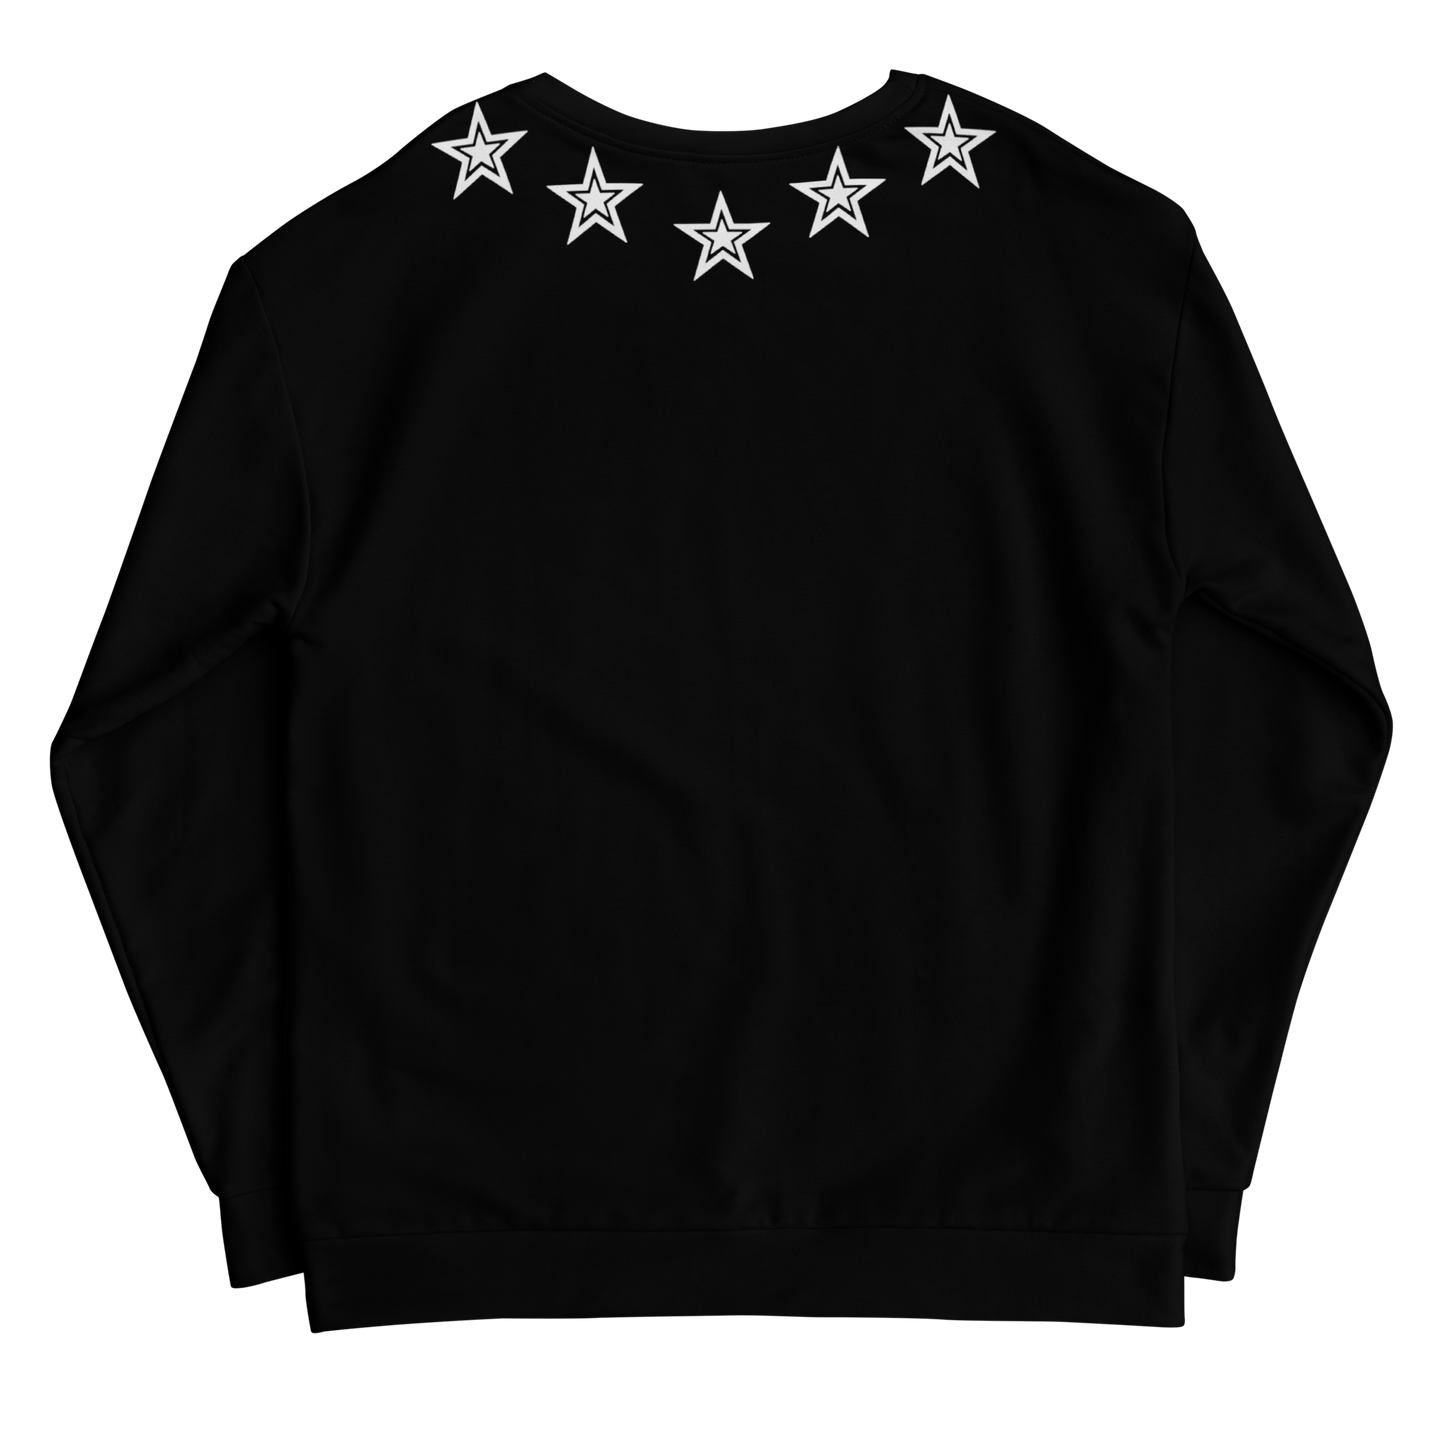 All Around Star Sweater